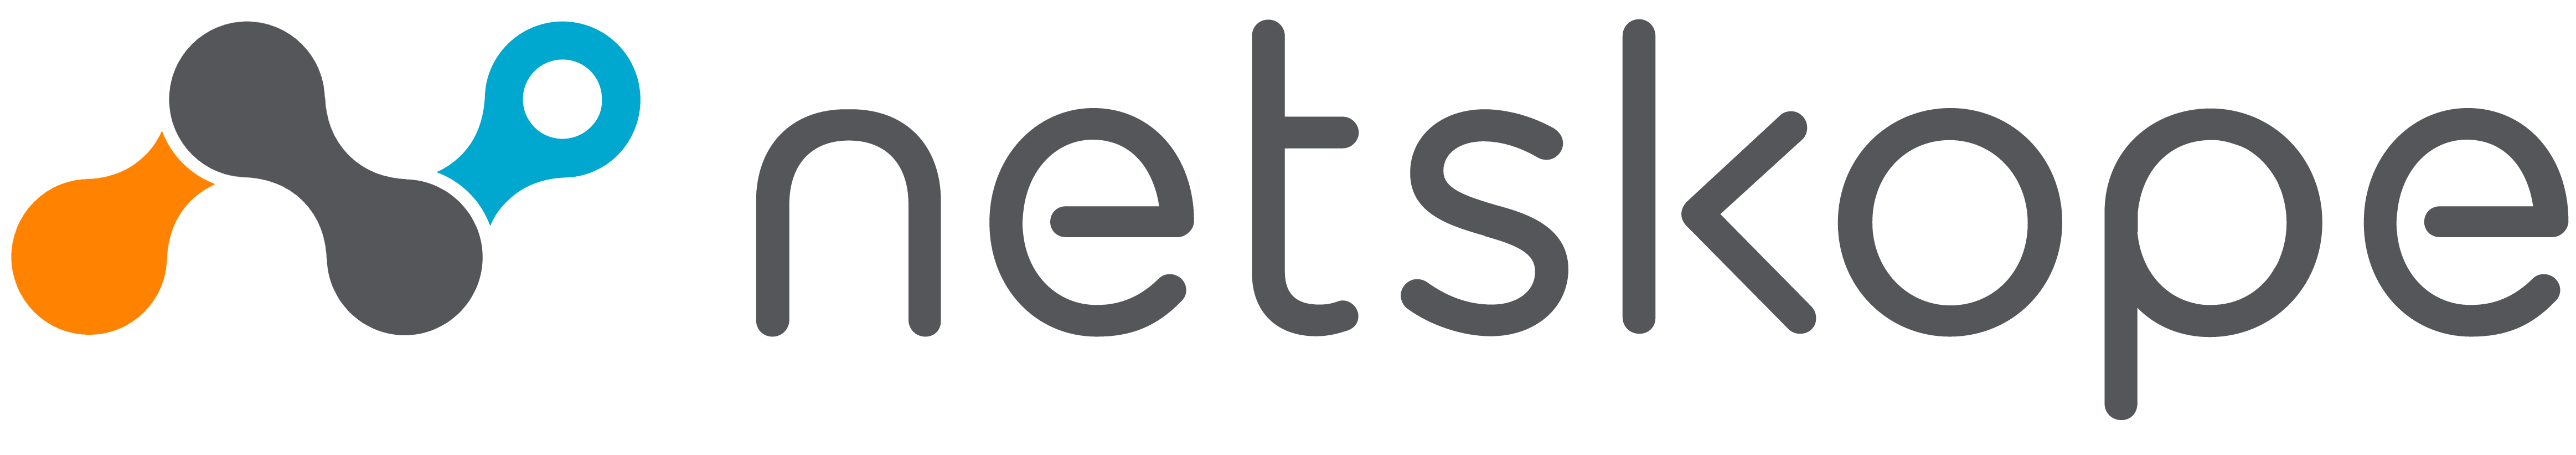 Netskope_logo_logotype